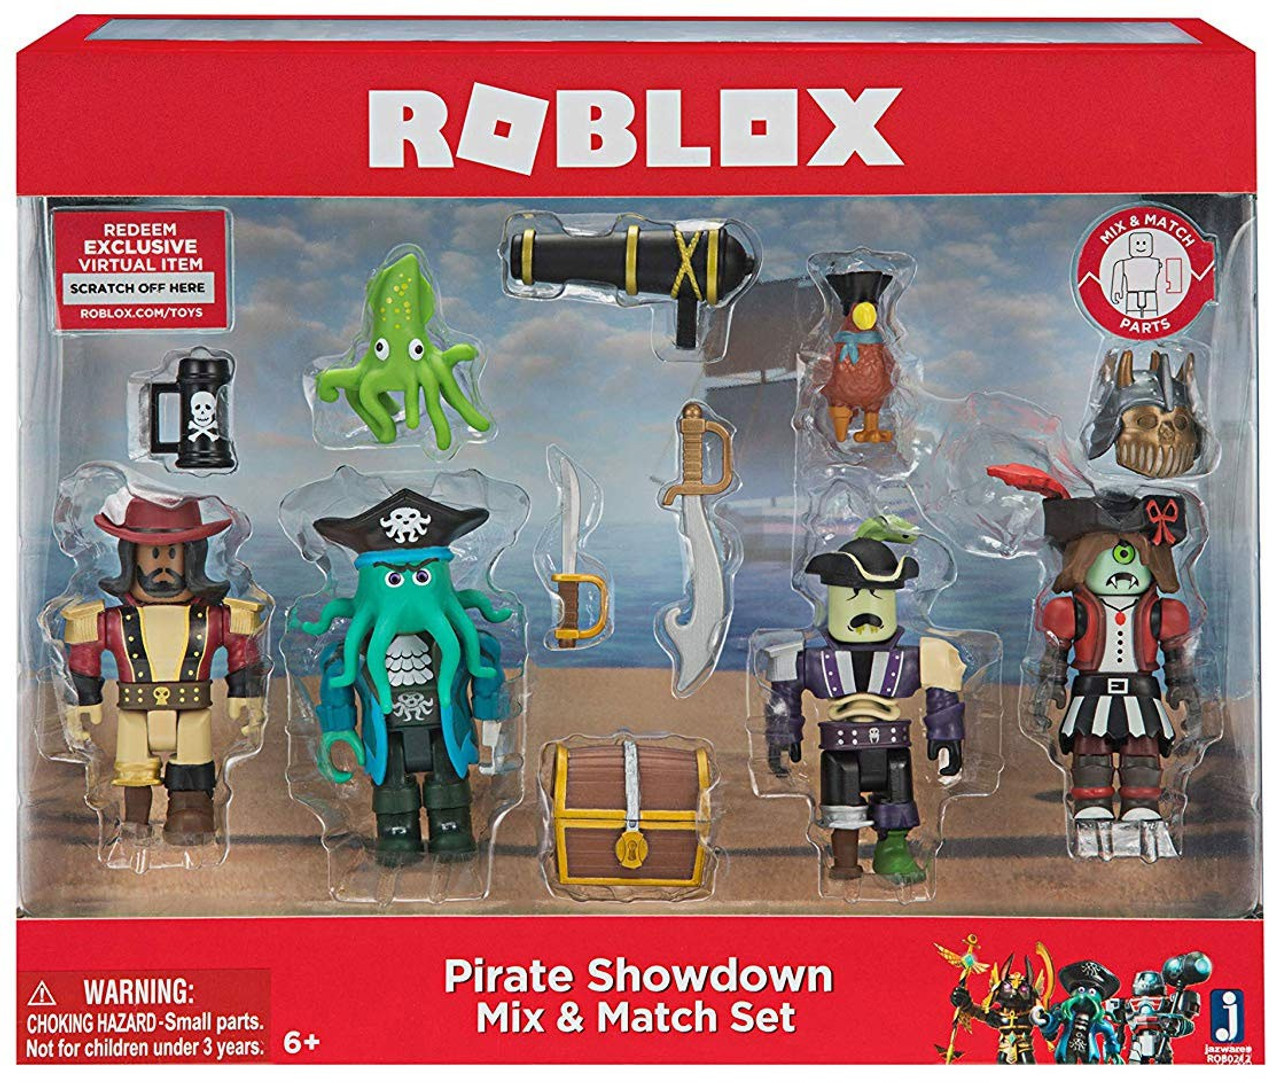 Roblox Zombie Set